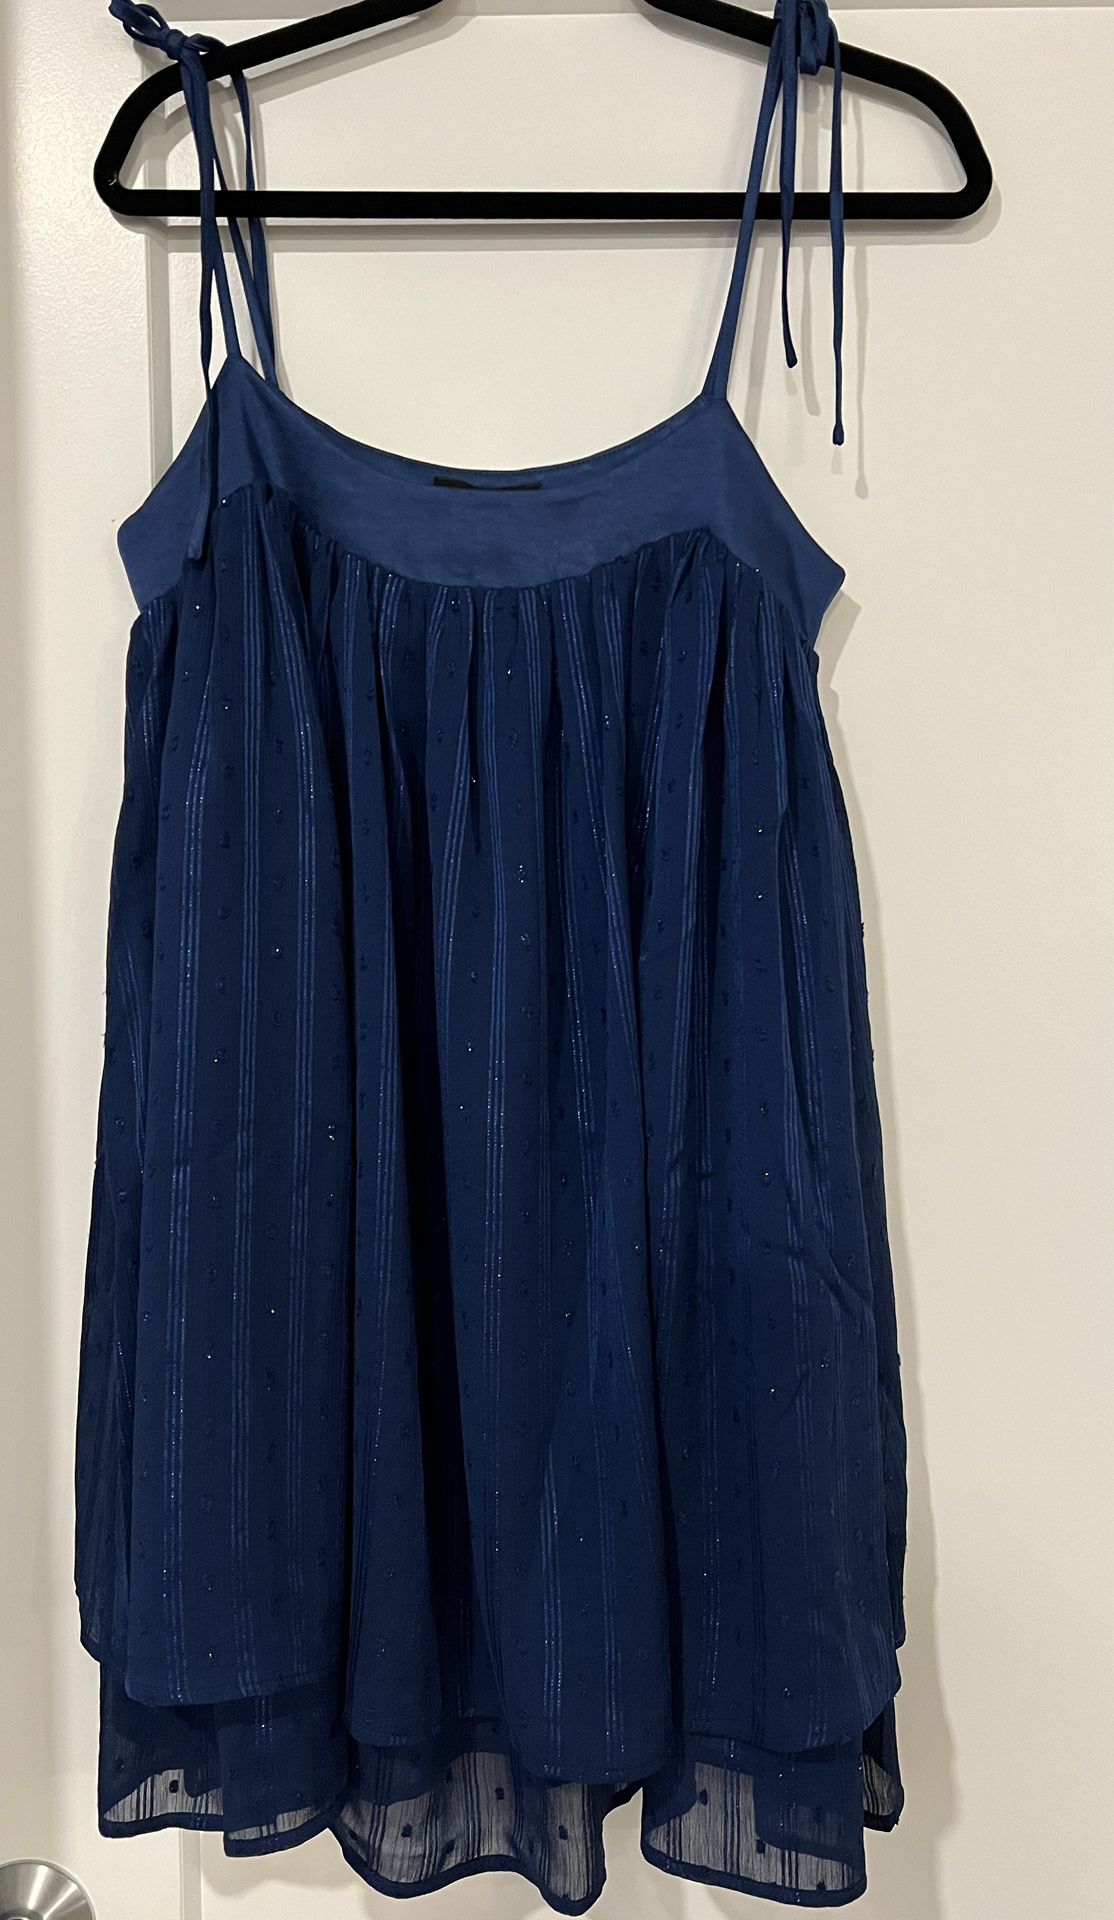 Navy  Blue Short Dress M-L